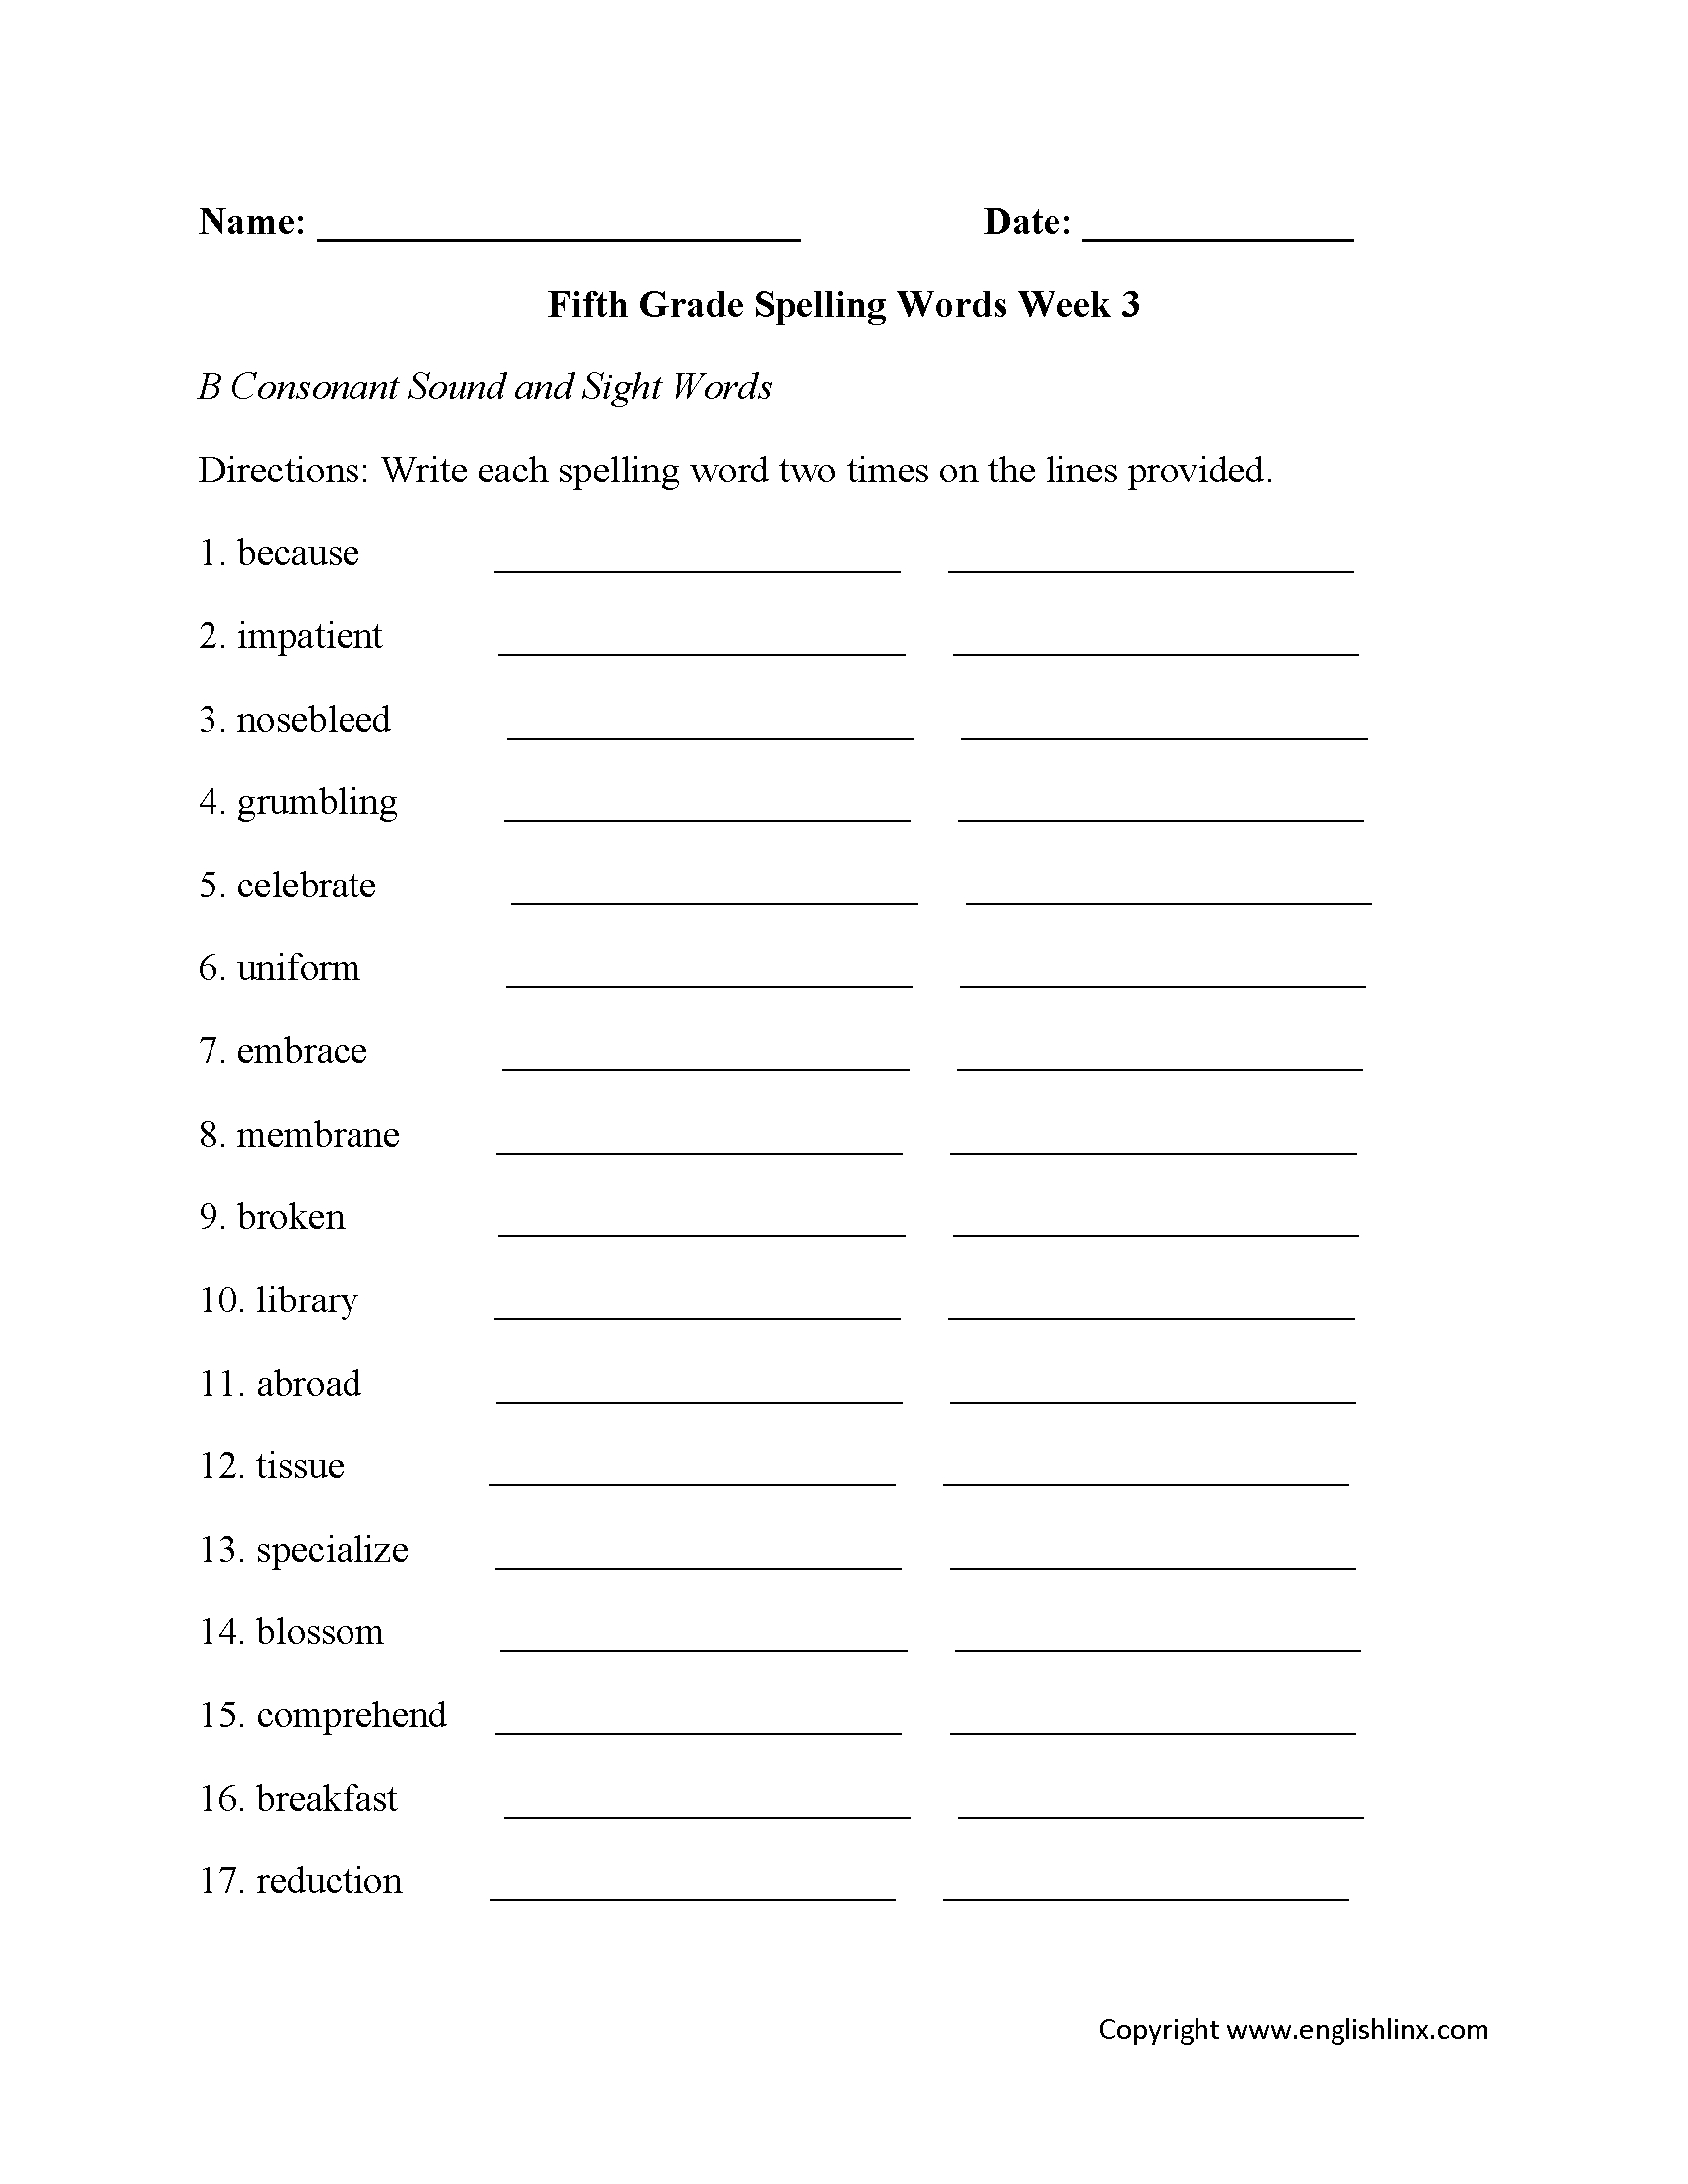 Spelling Worksheets  Fifth Grade Spelling Worksheets